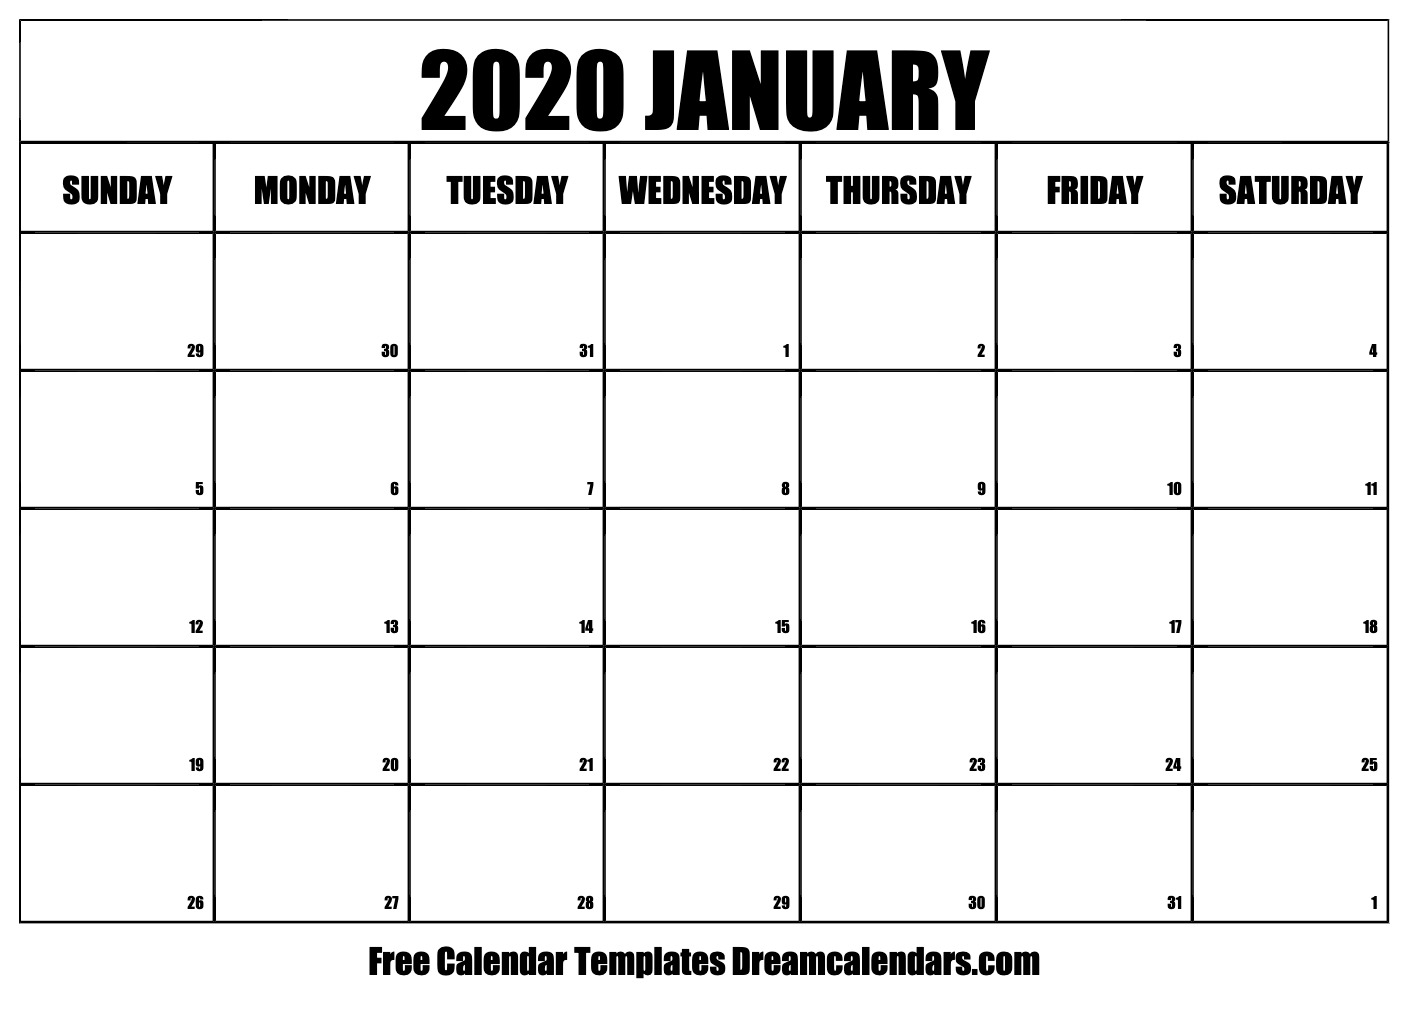 Dream Calendars Make Your Calendar Template Blog